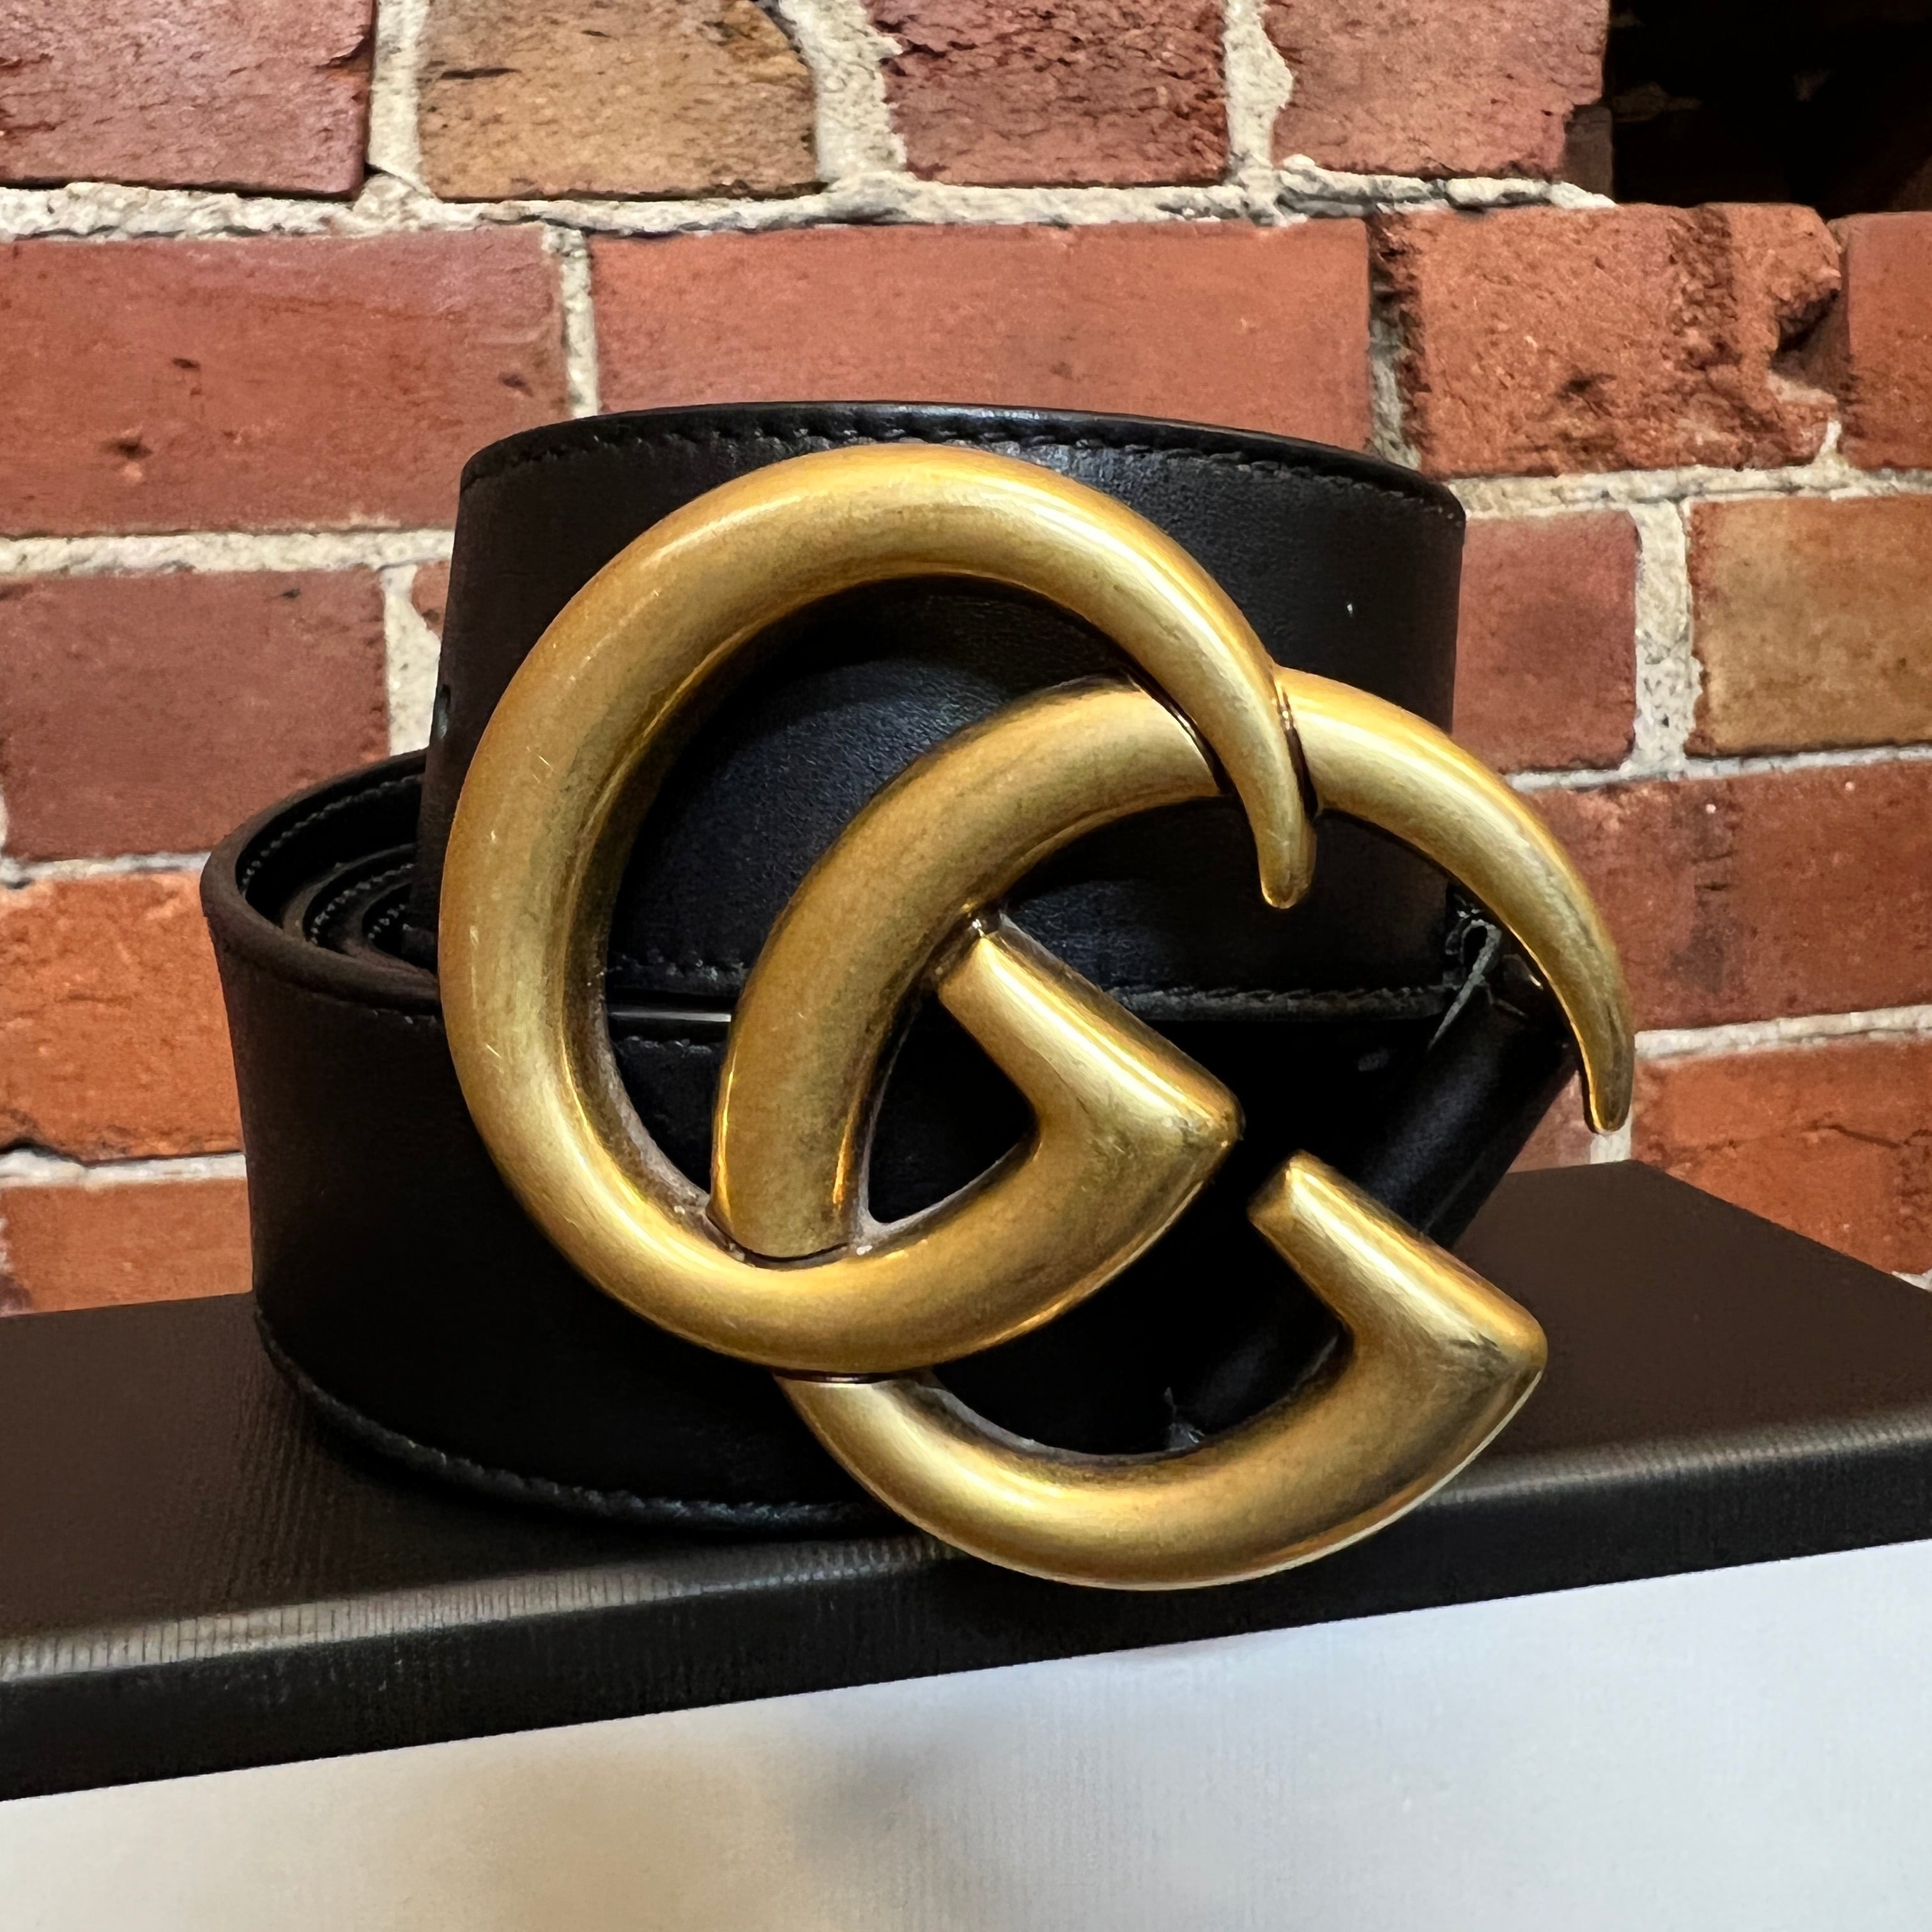 GUCCI Classic leather belt